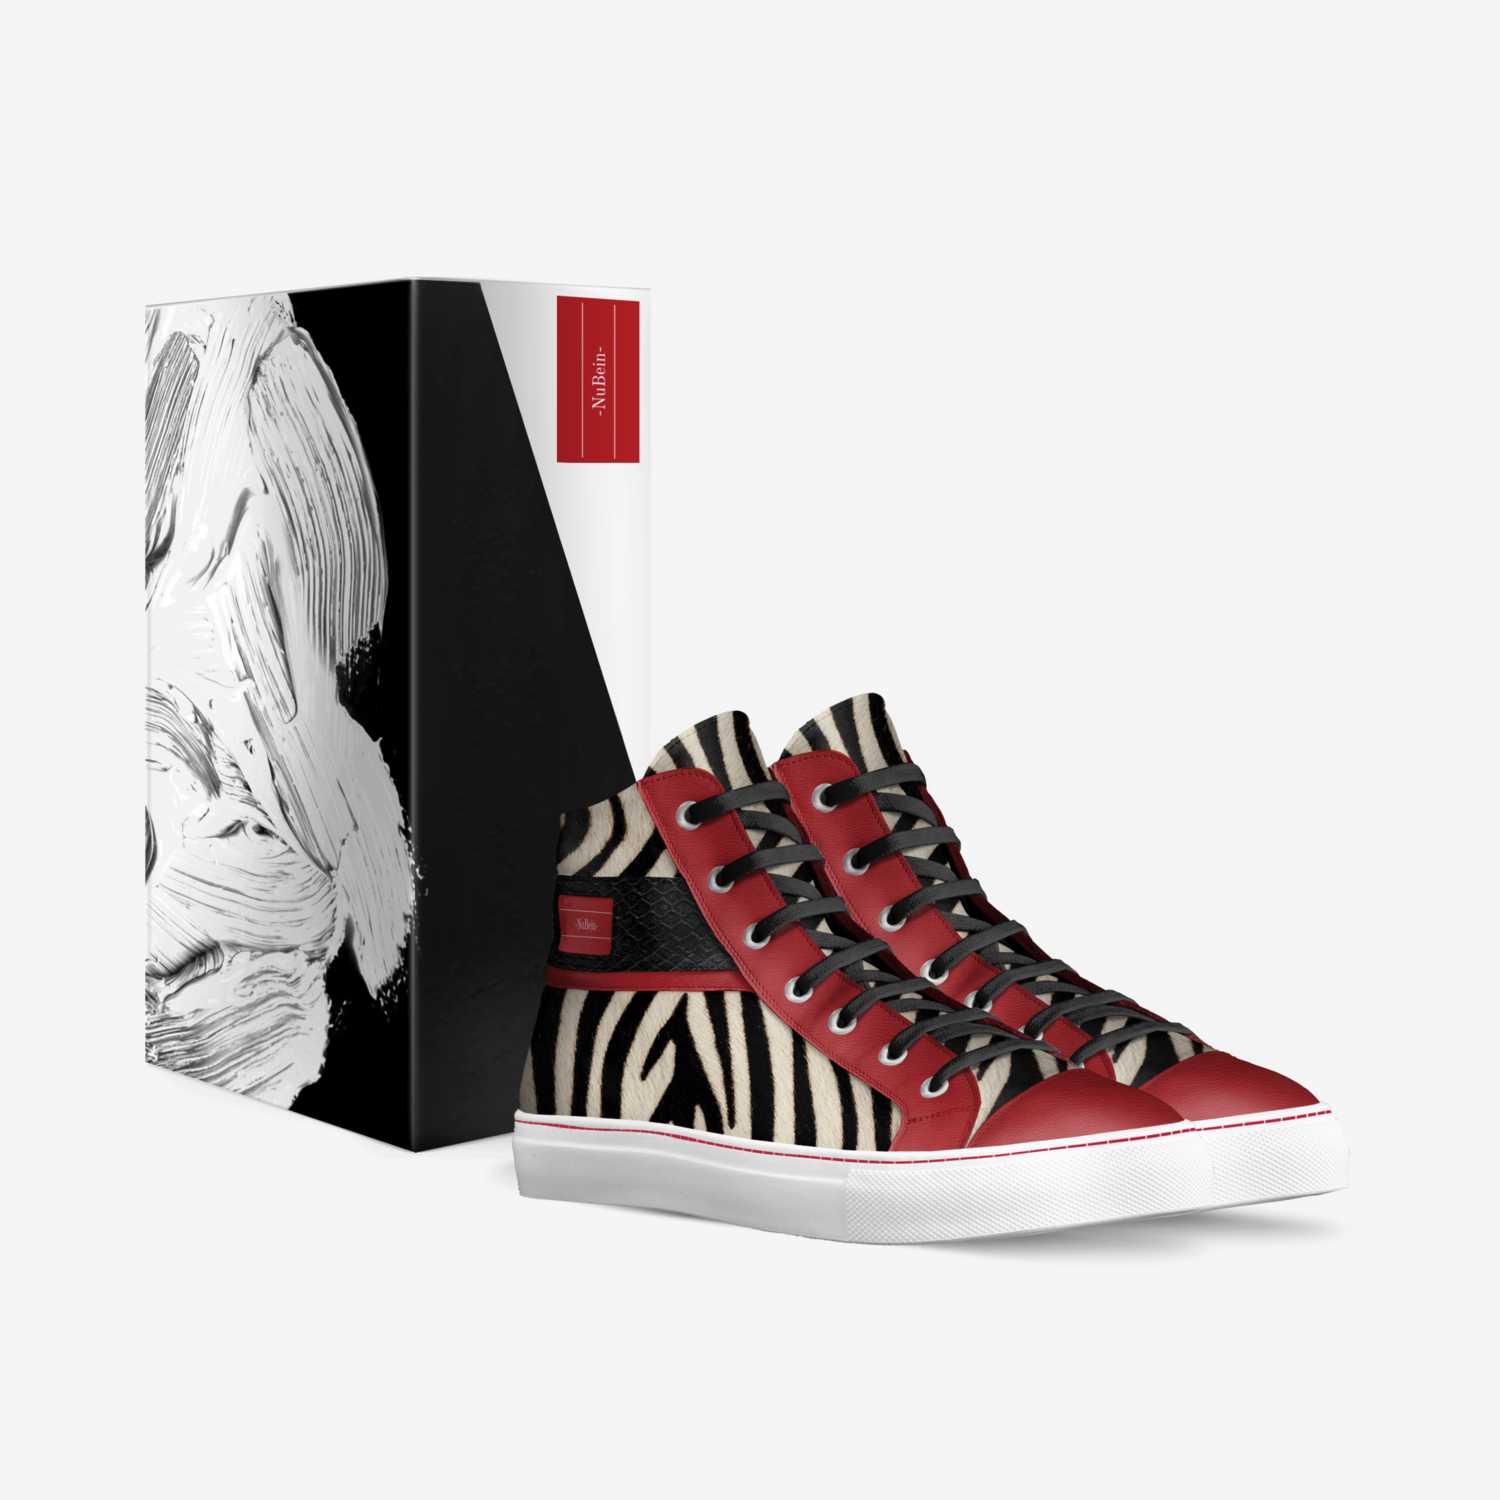 -TAFARI- custom made in Italy shoes by Ashar Hone | Box view